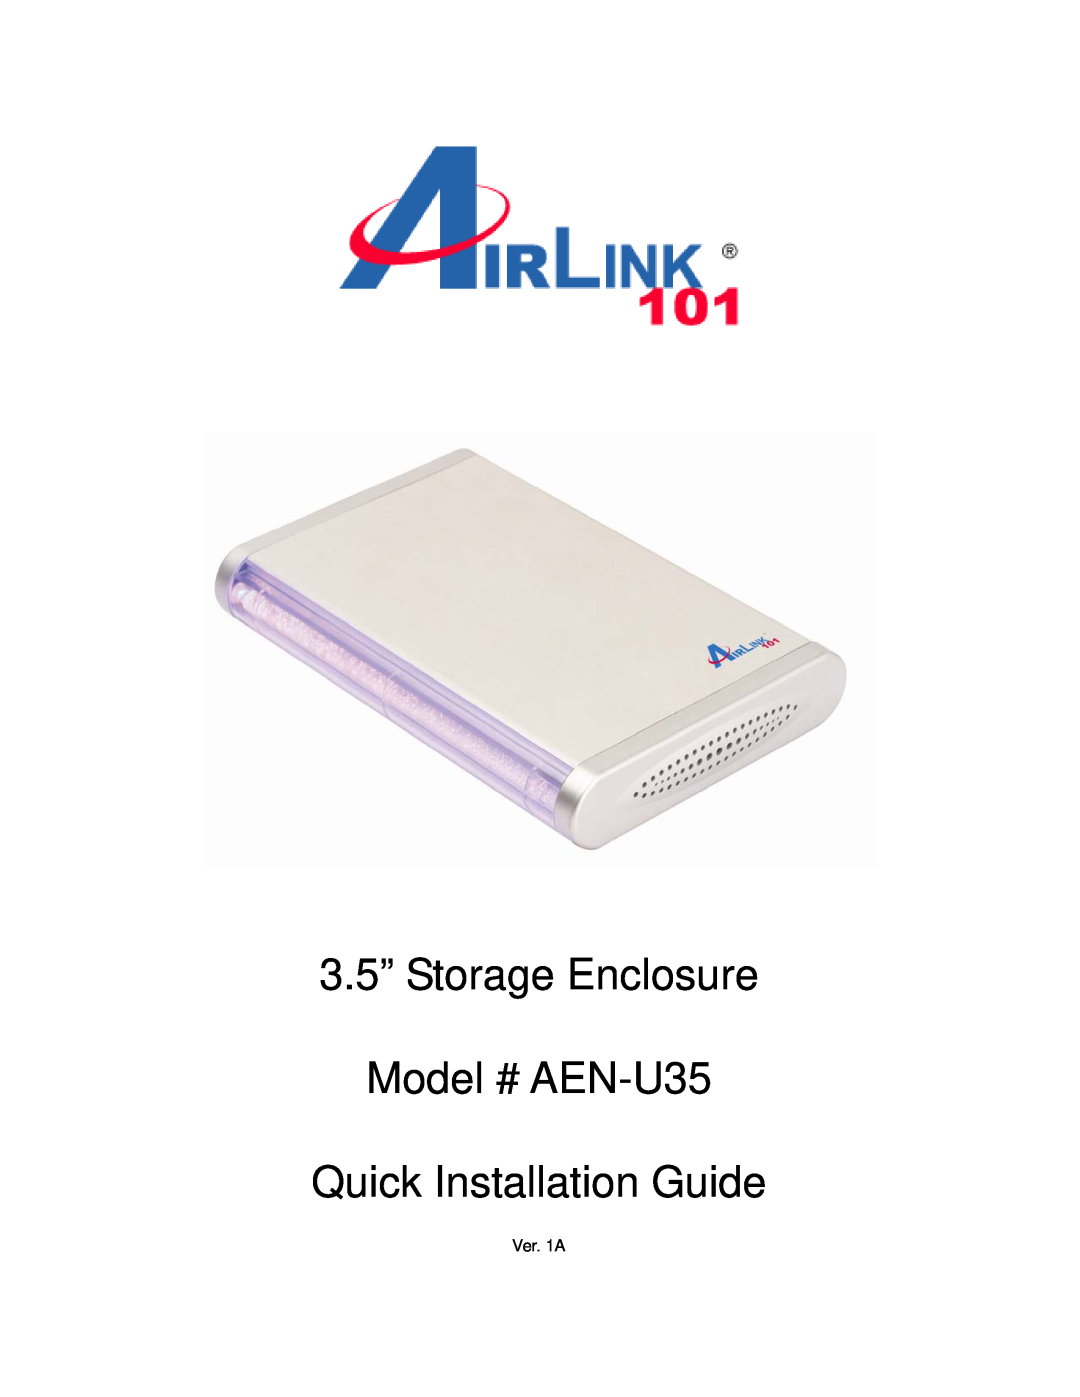 Airlink101 manual 3.5” Storage Enclosure Model # AEN-U35 Quick Installation Guide, Ver. 1A 